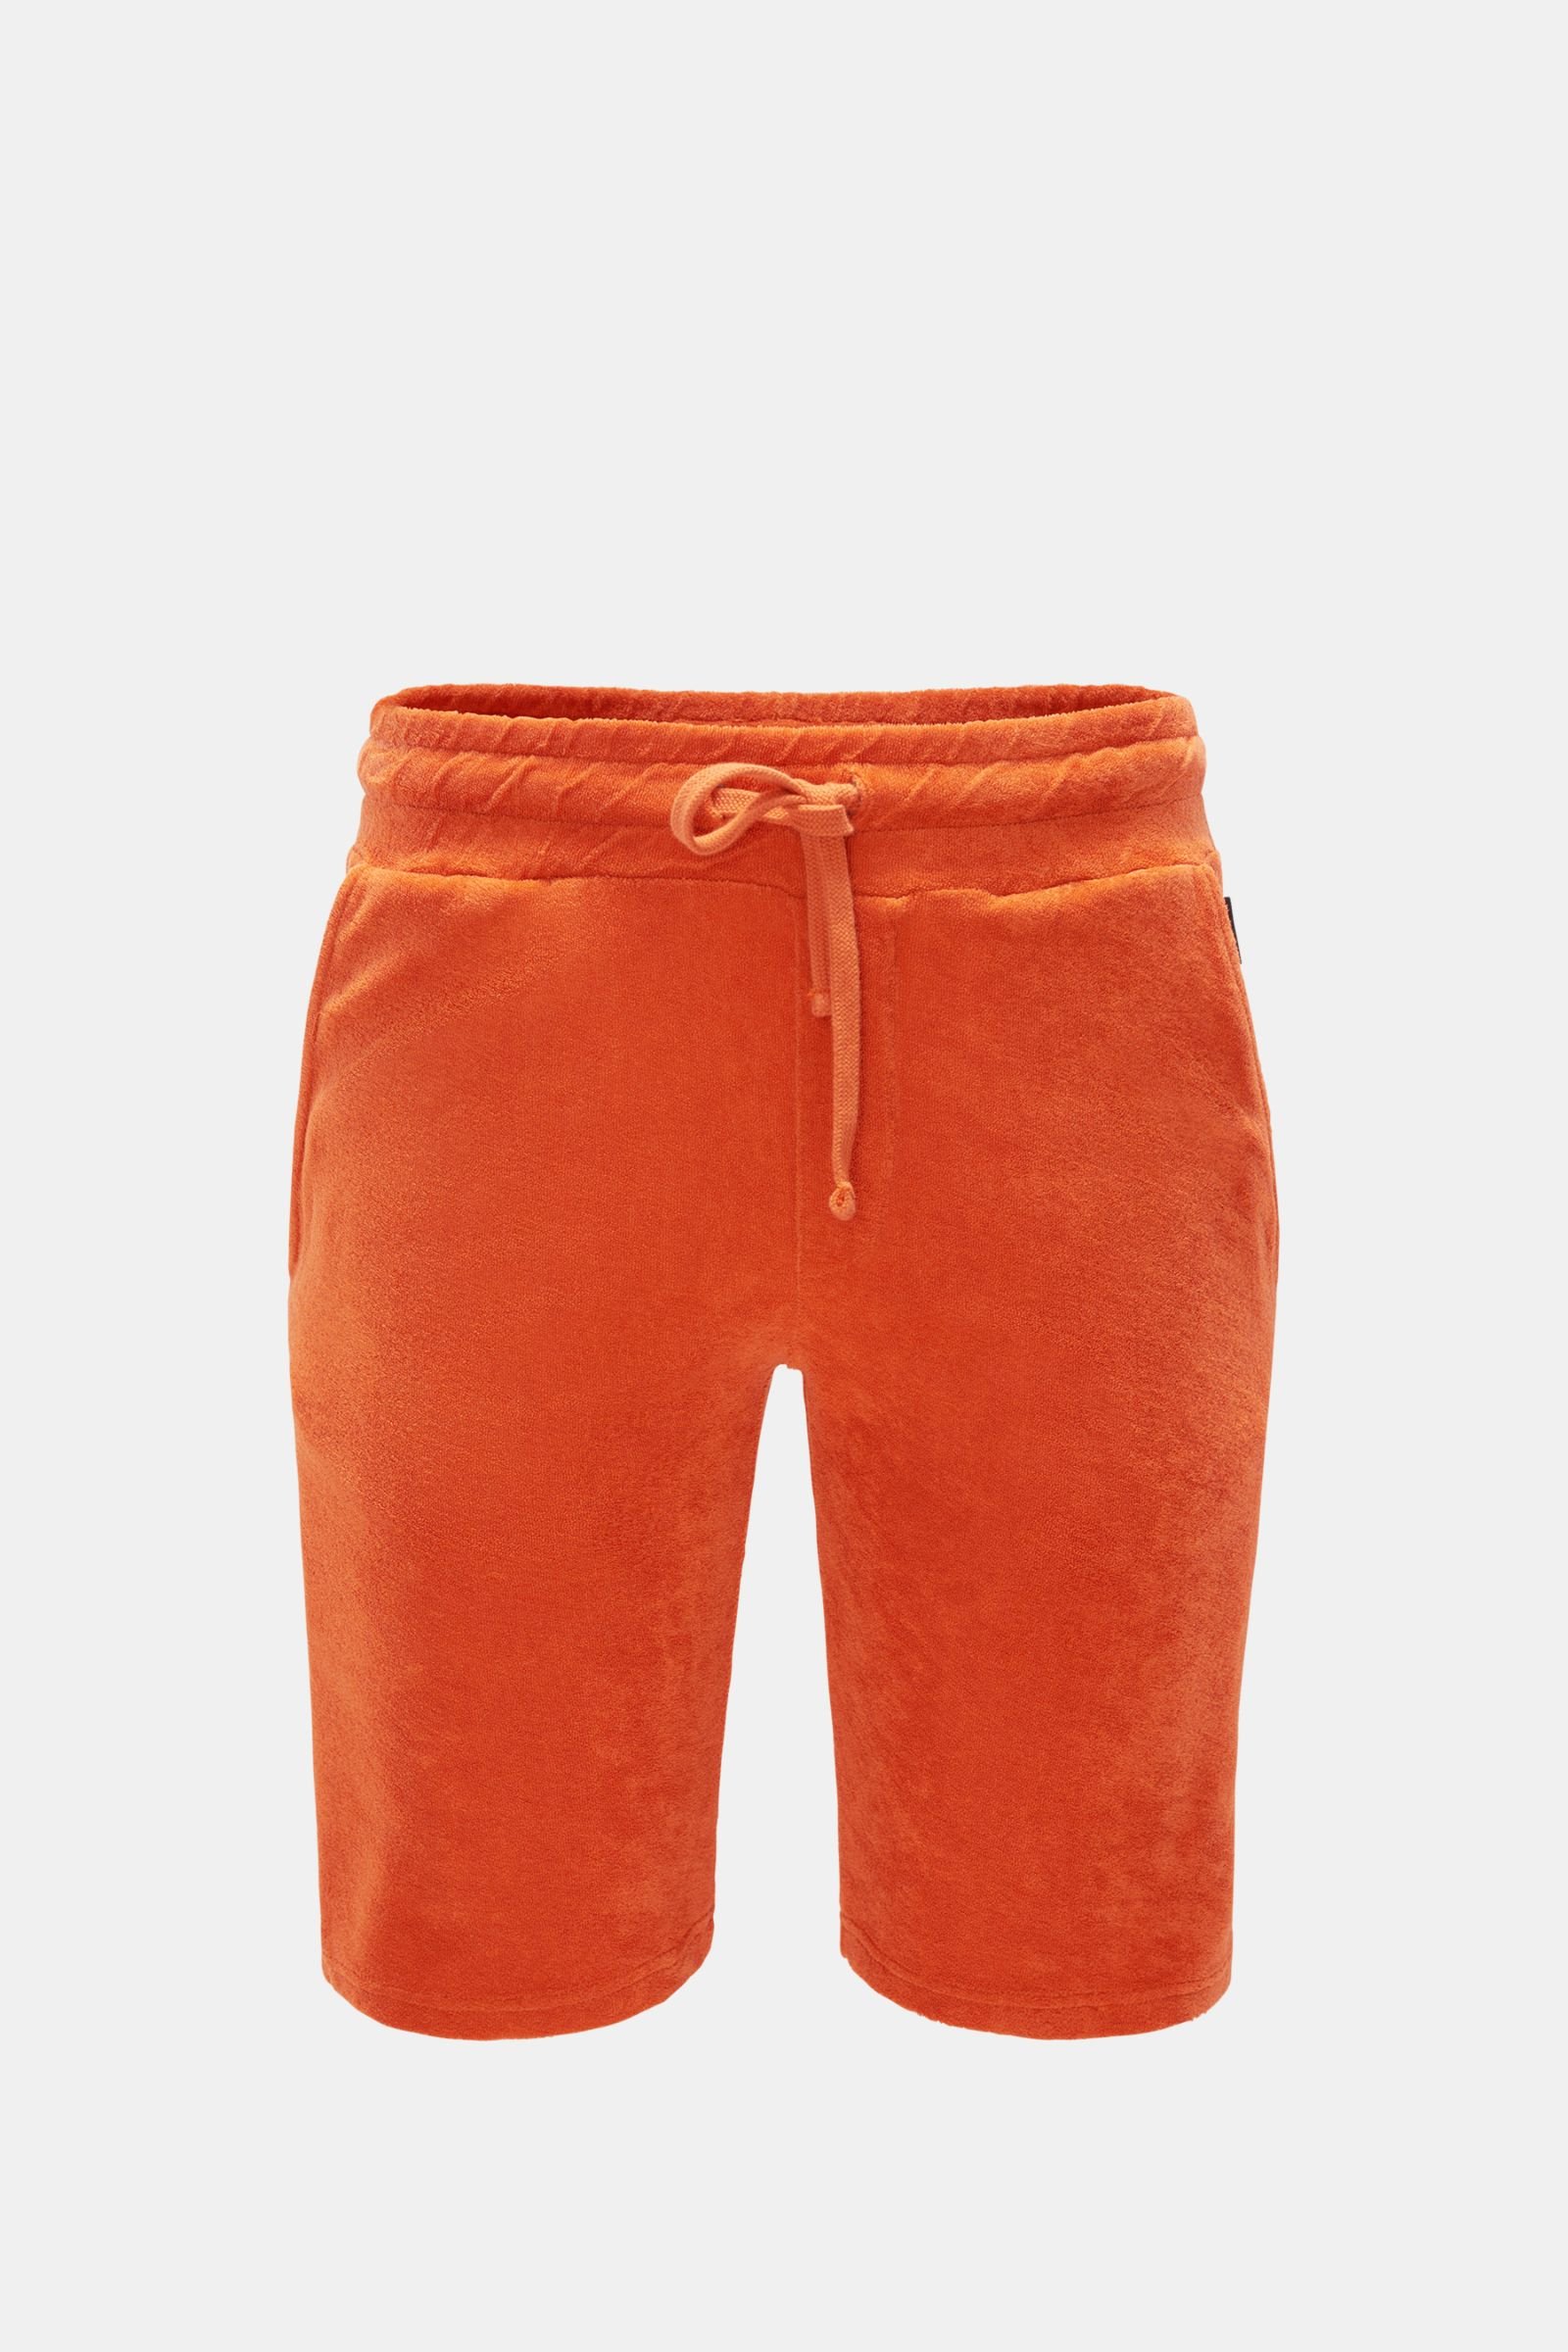 Terry Bermuda shorts 'Terry Bermuda' orange